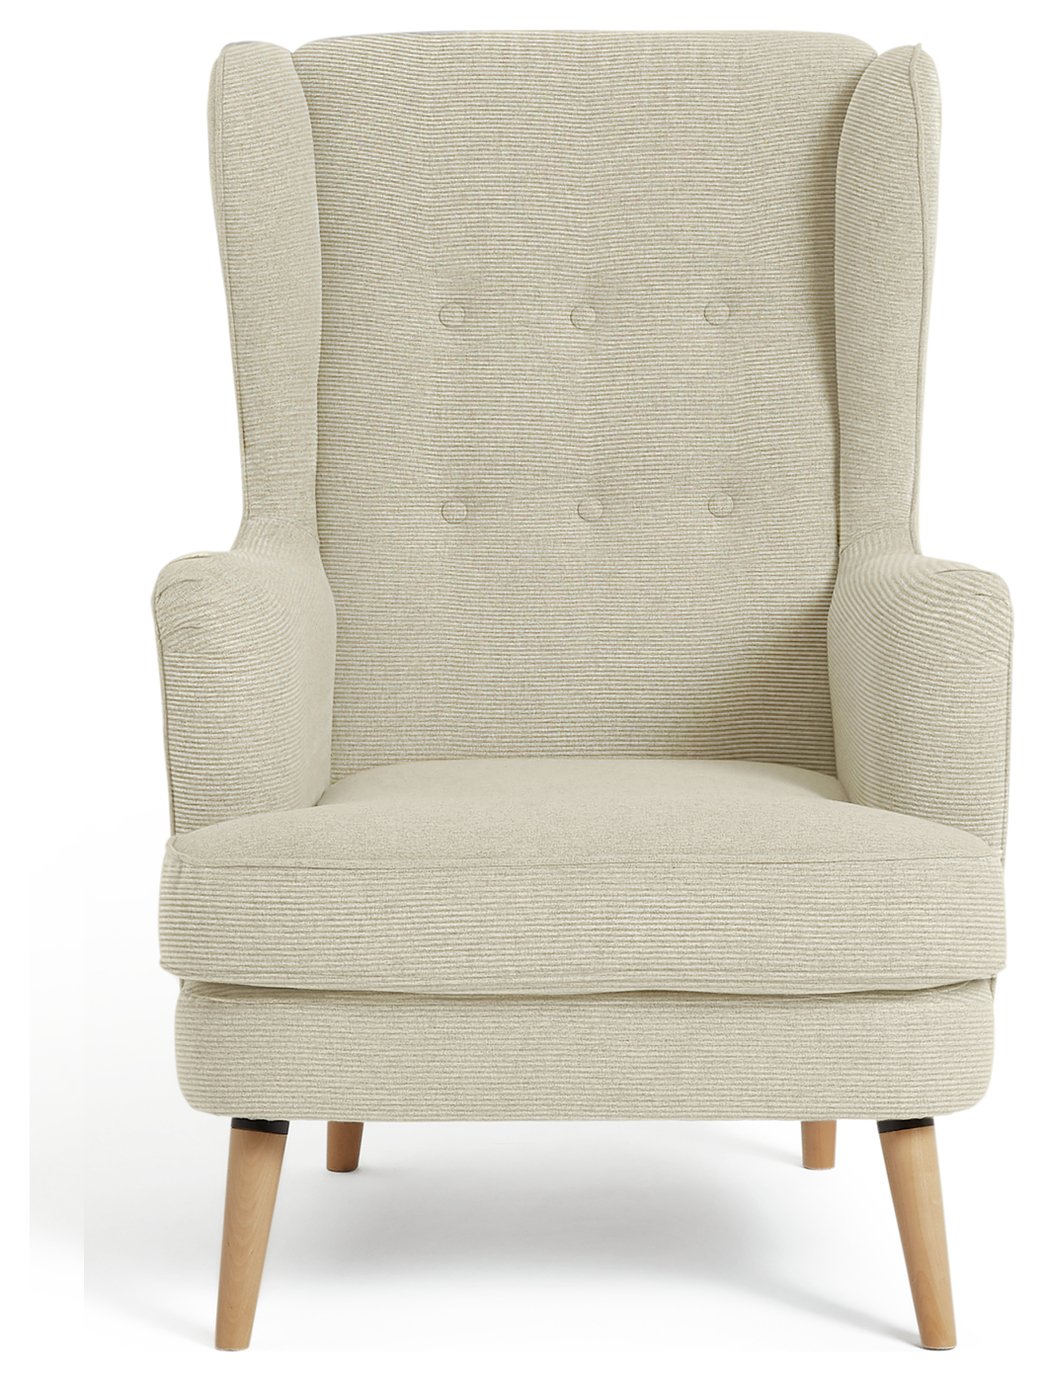 Habitat Callie Fabric Wingback Chair - Latte